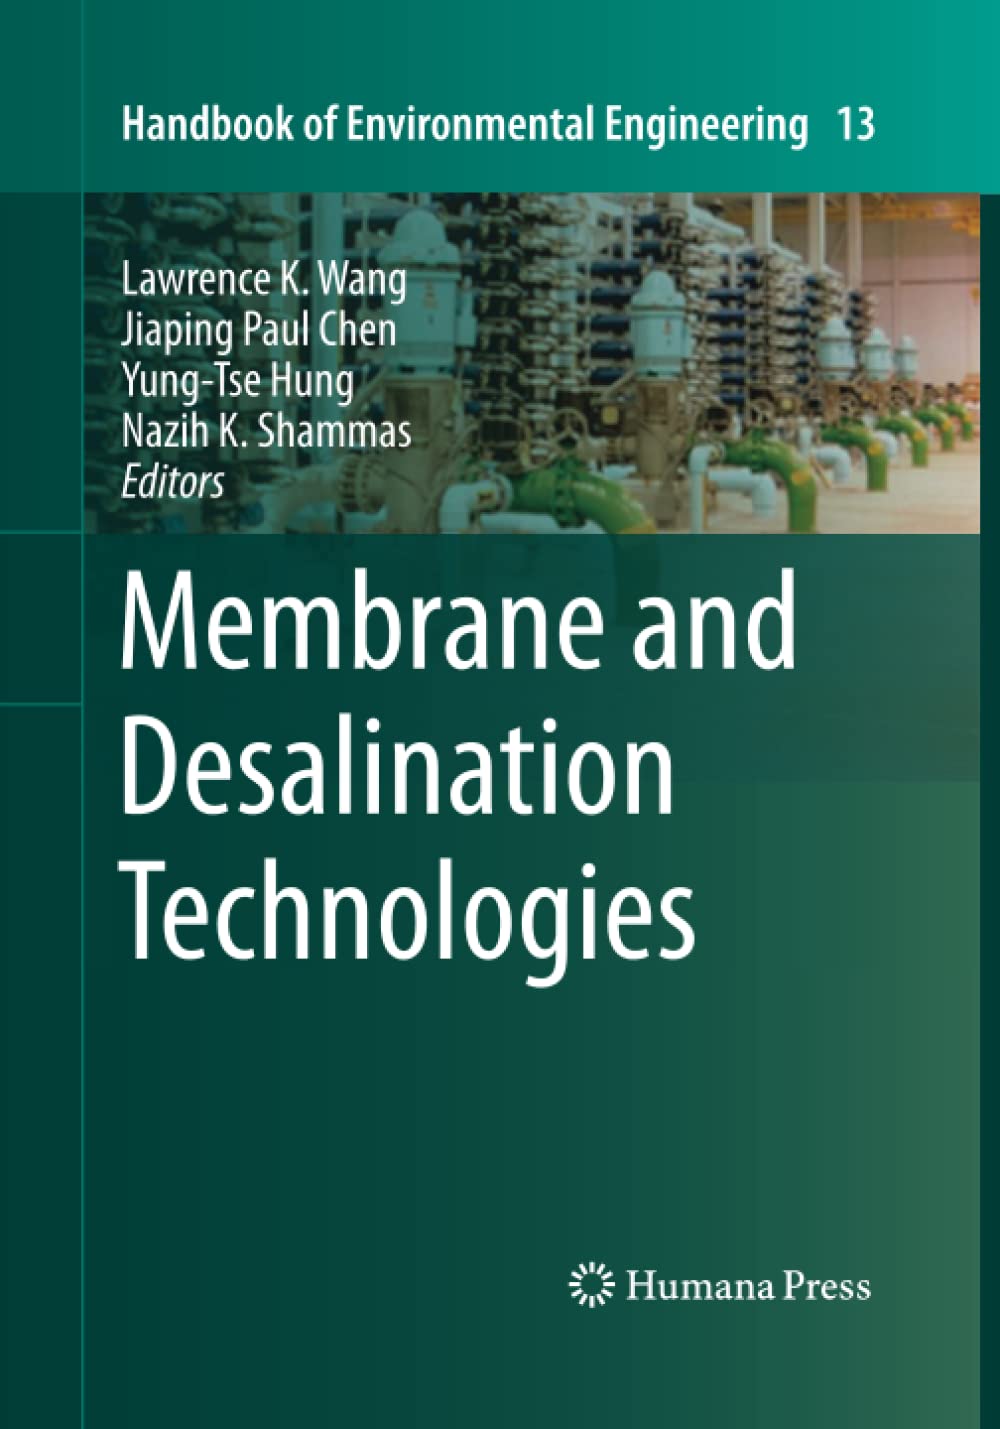 Membrane and Desalination Technologies (Handbook of Environmental Engineering, 13)